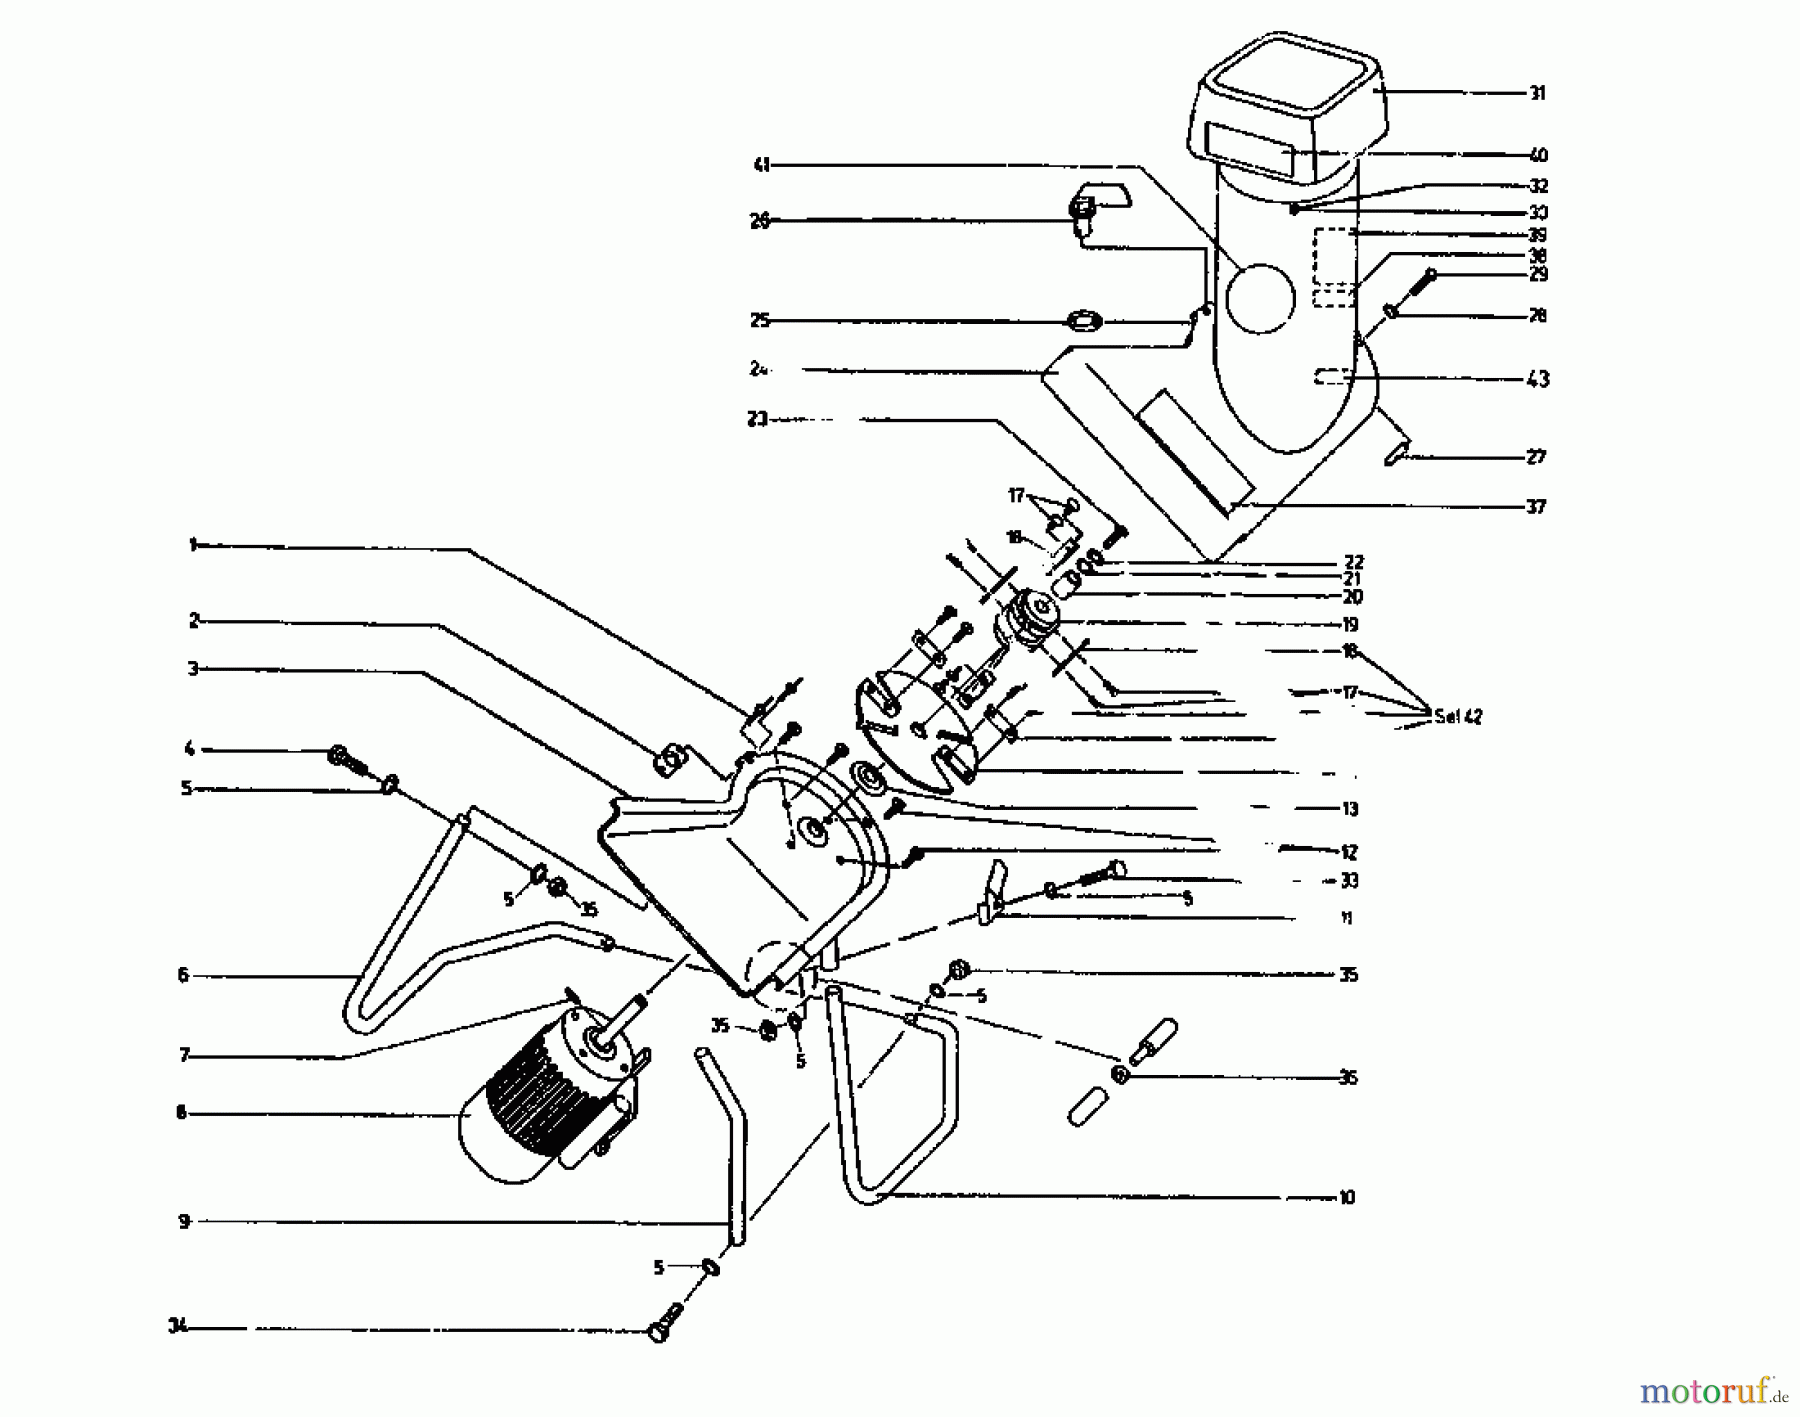  Gutbrod Chipper GAE 18 04002.04  (1993) Basic machine